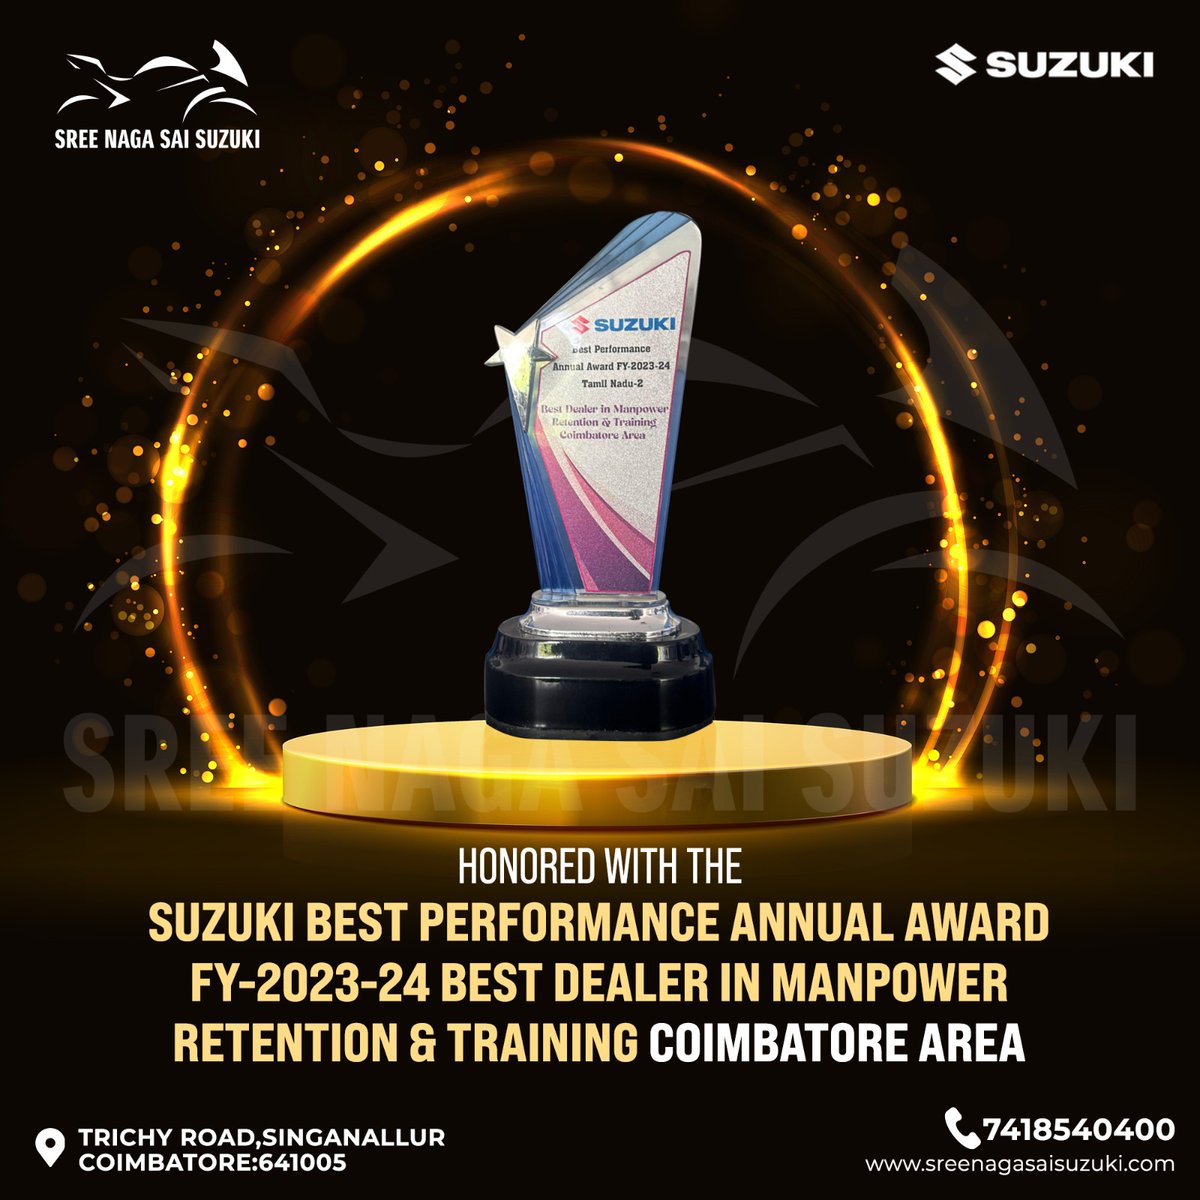 We are proud to announce that Sree Naga Sai Suzuki has been honoured with the Over All Performance Award at the Suzuki Best Performance Annual Award FY-2023-24. Kudos to the team that led us to success!

#SreeNagaSaiSuzuki #PremiumSuzuki
#Coimbatore #NowOpen #ComeVisitUs #Award